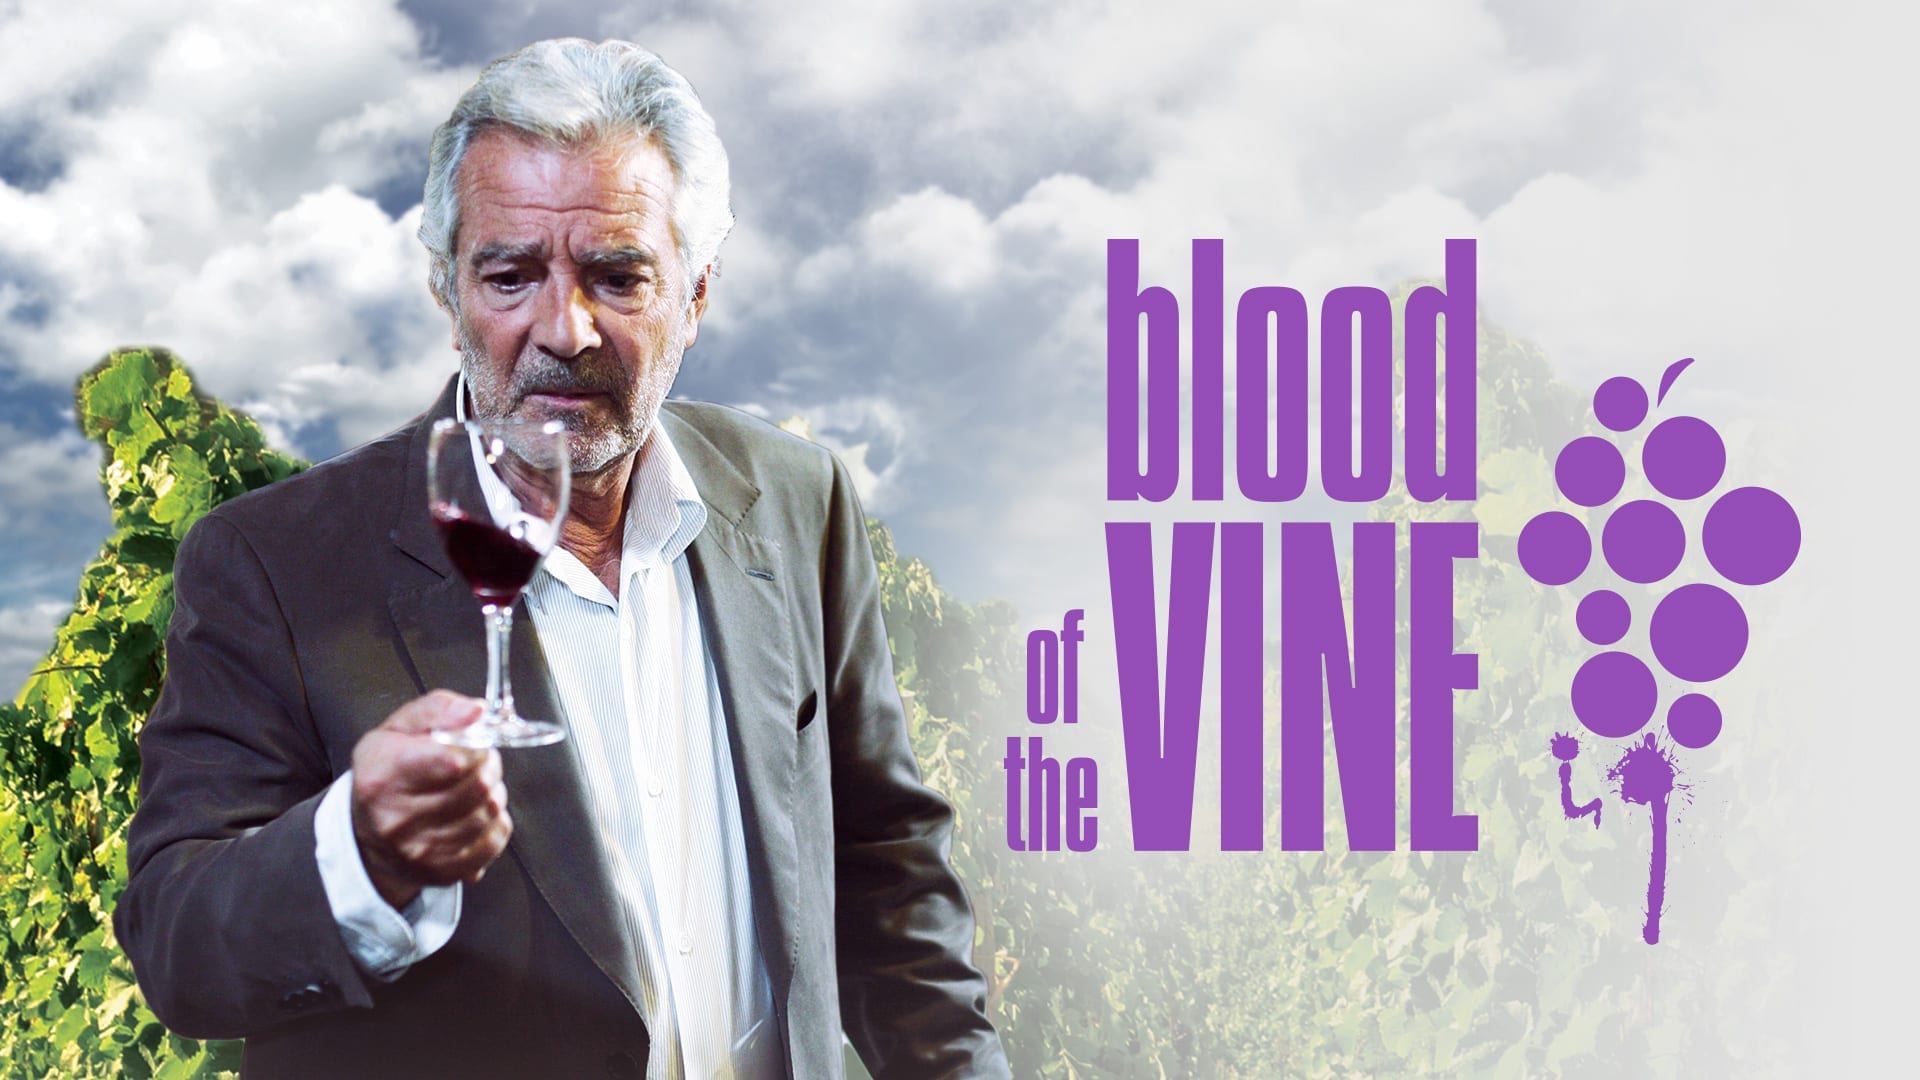 blood of the vine vimeo ott series banner 1920x1080 1